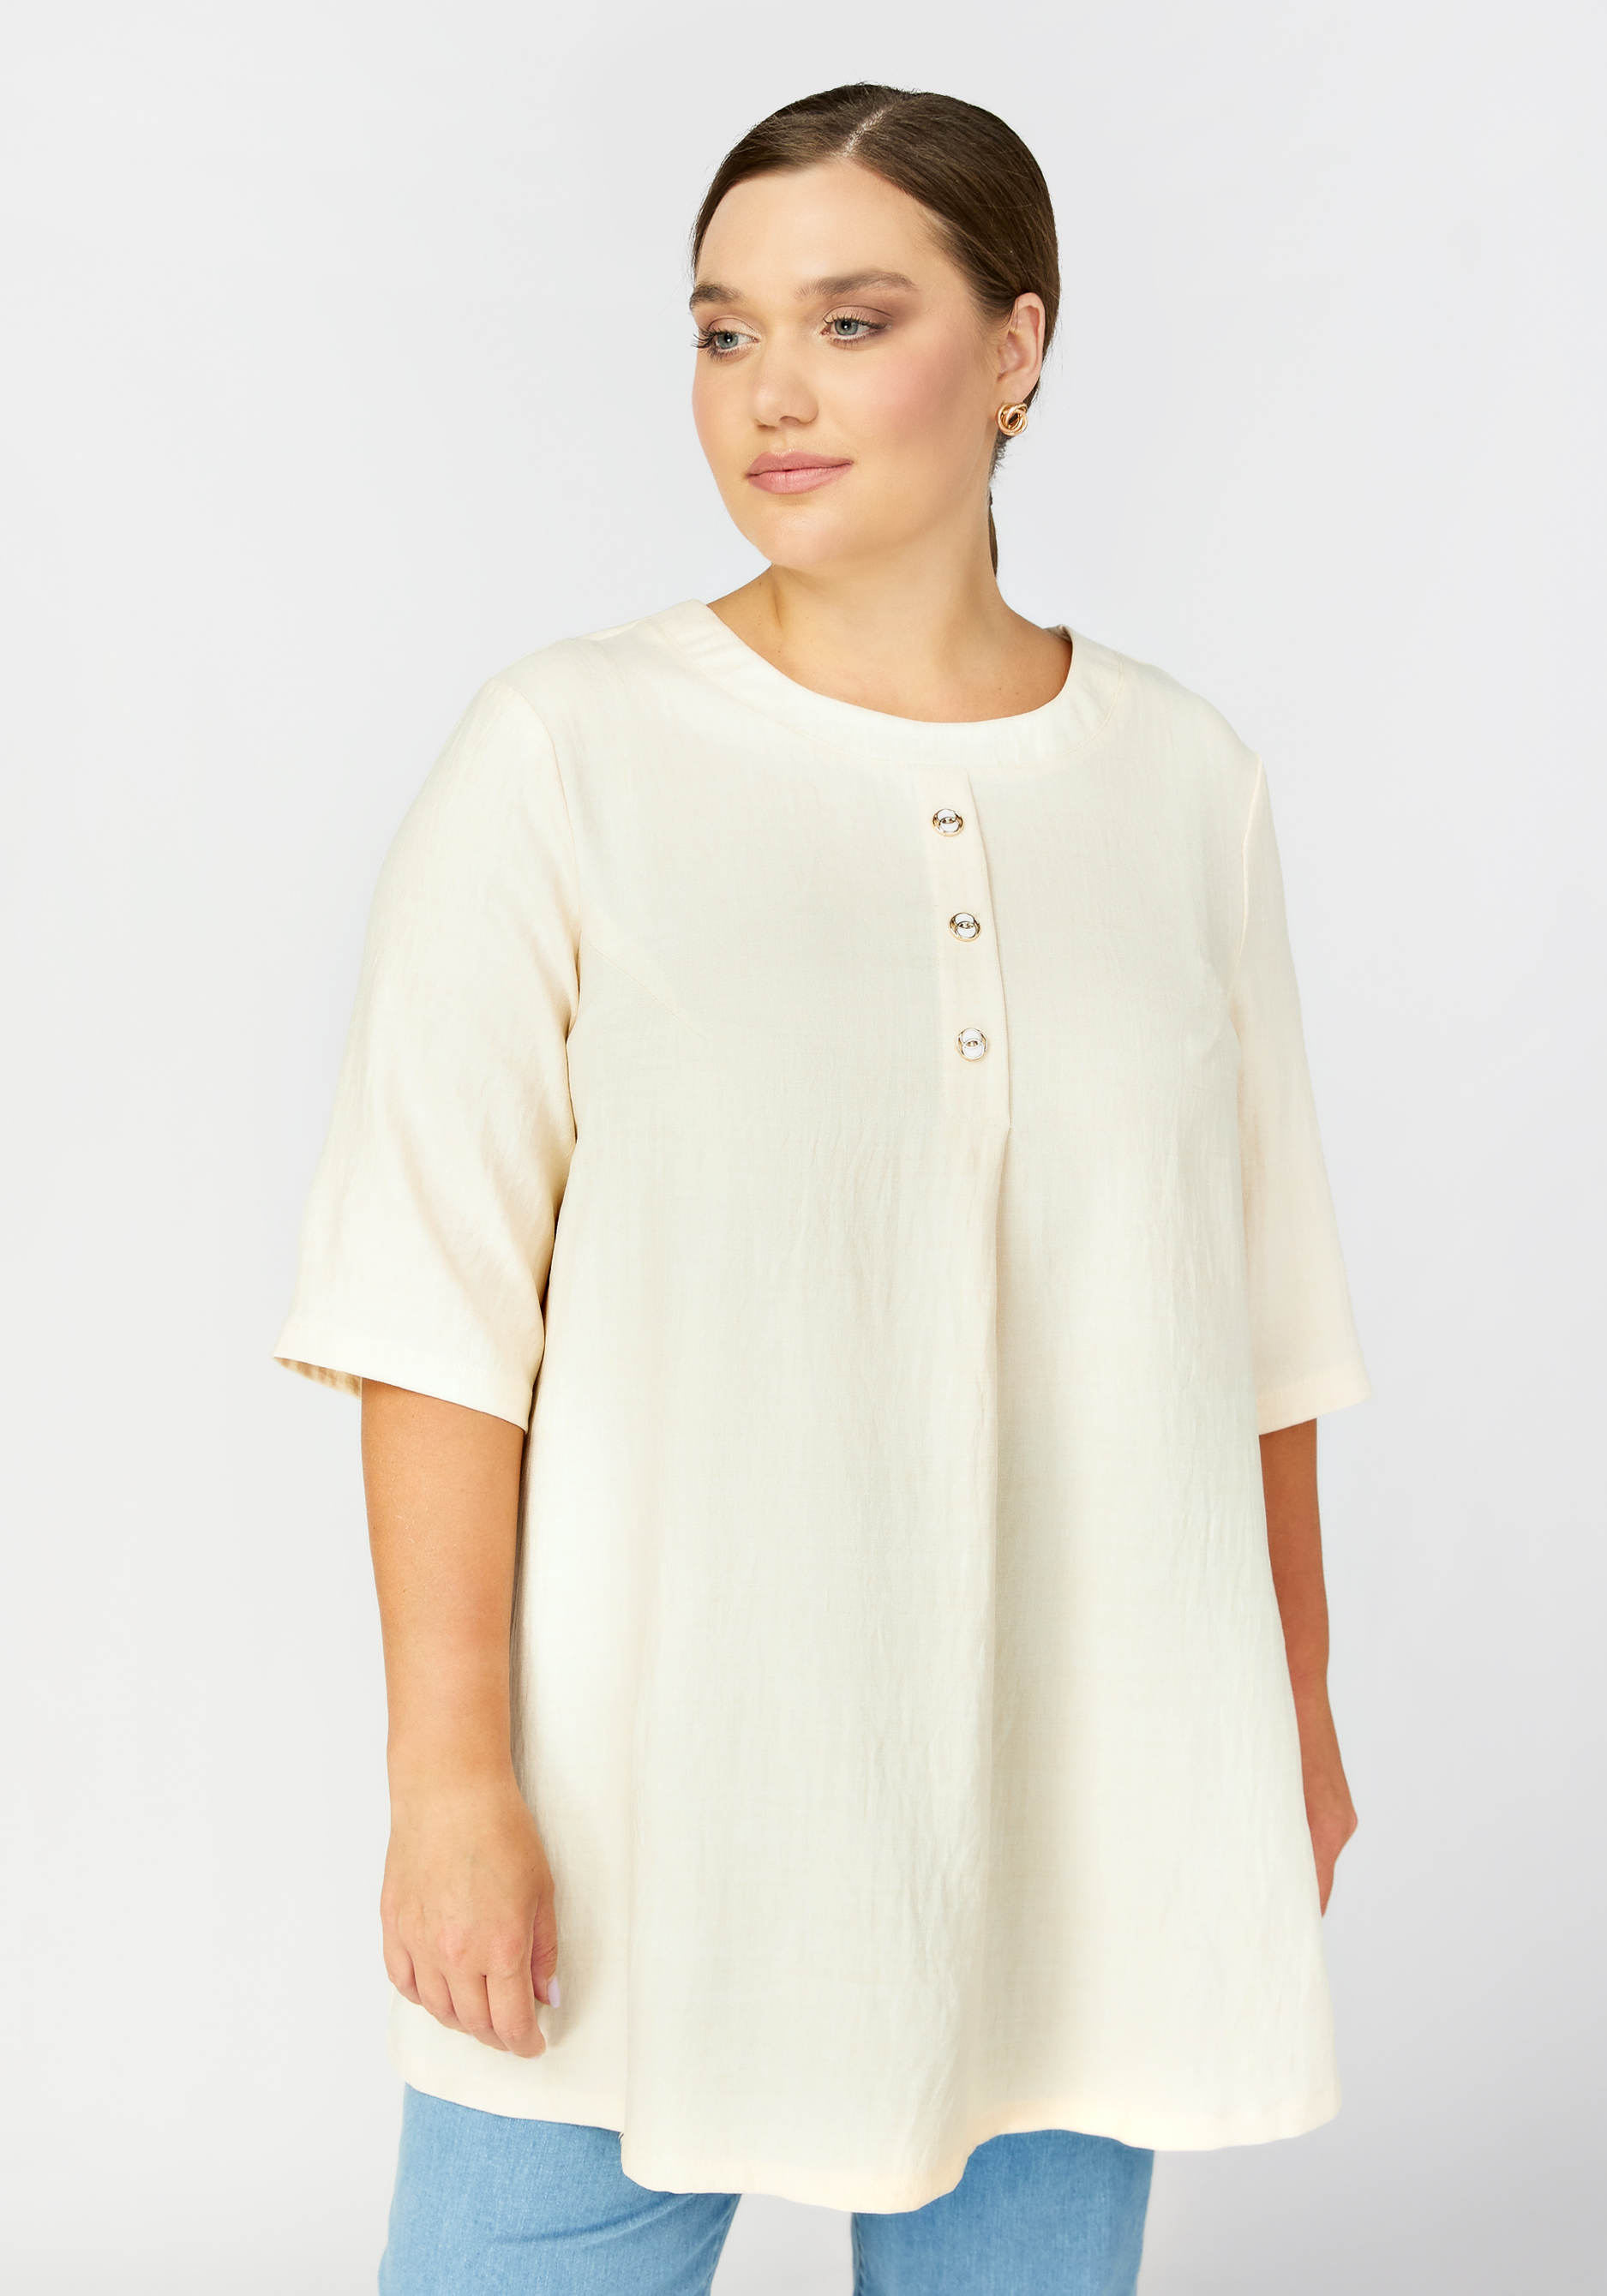 Блуза с планкой на пуговицах жен блуза силви белый р 52